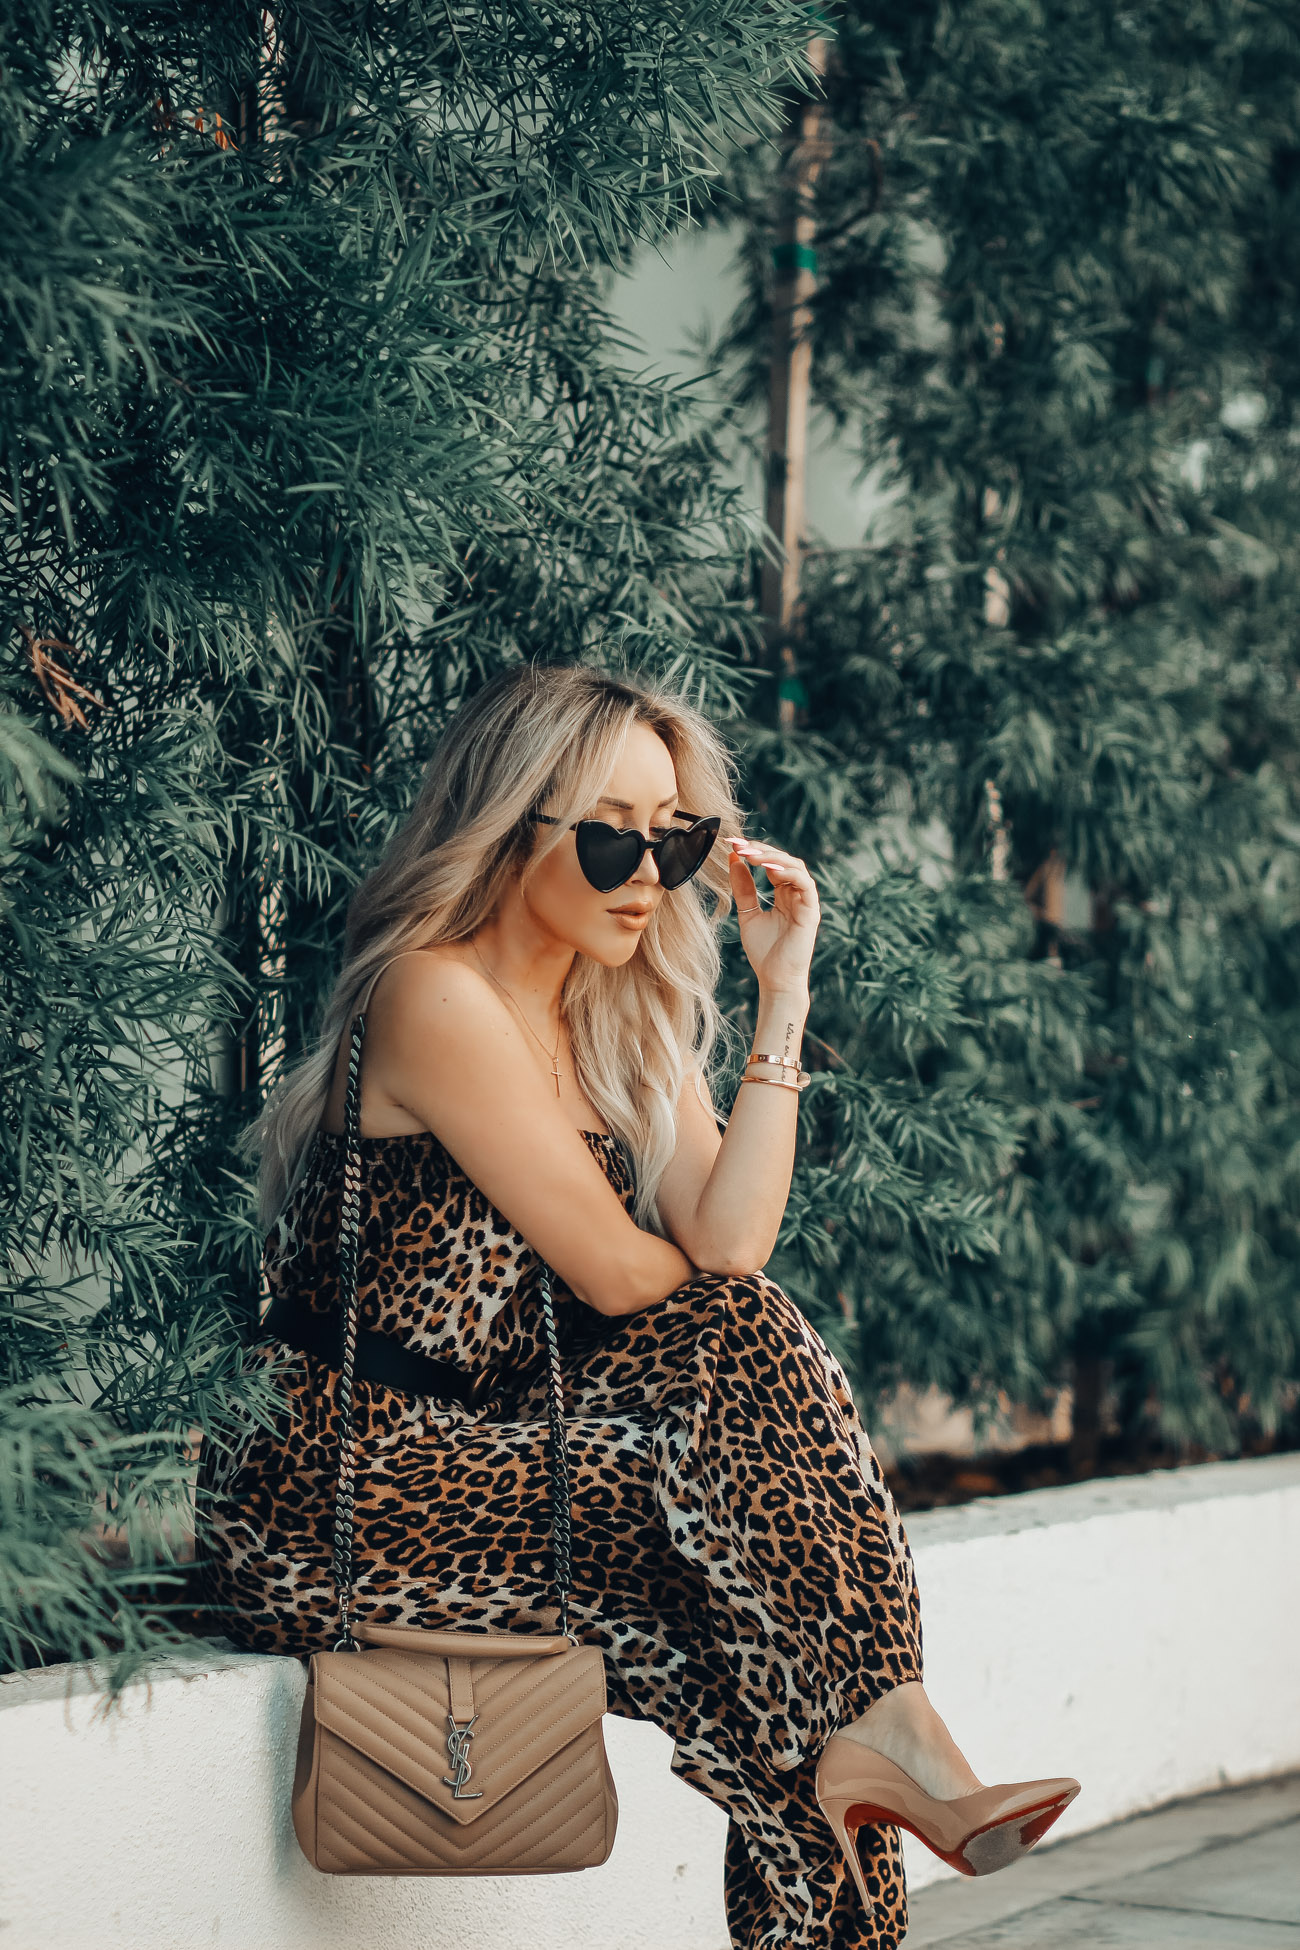 Leopard Jumpsuit | Gucci Belt | Heart Sunnies | Blondie in the City by Hayley Larue